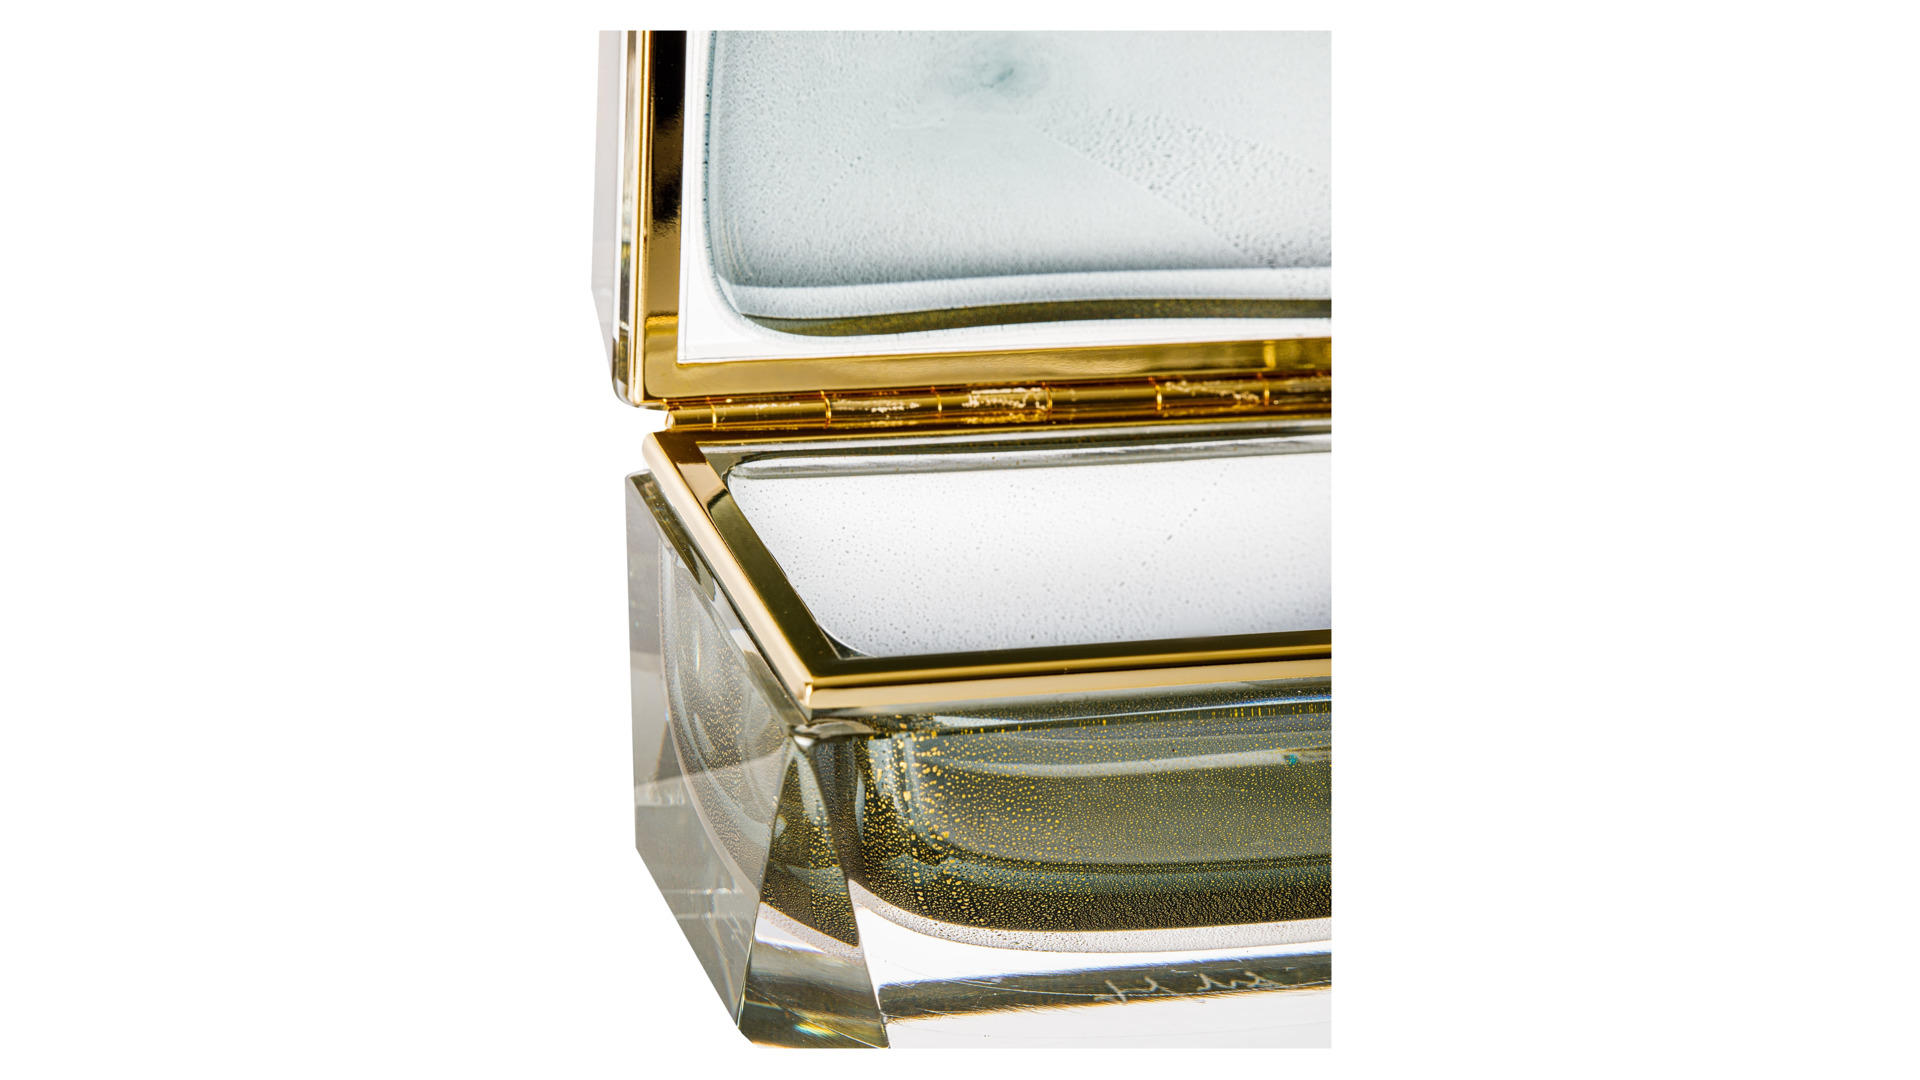 Шкатулка для украшений Alessandro Mandruzzato 18х12х11 см, стекло муранское, золото, серая